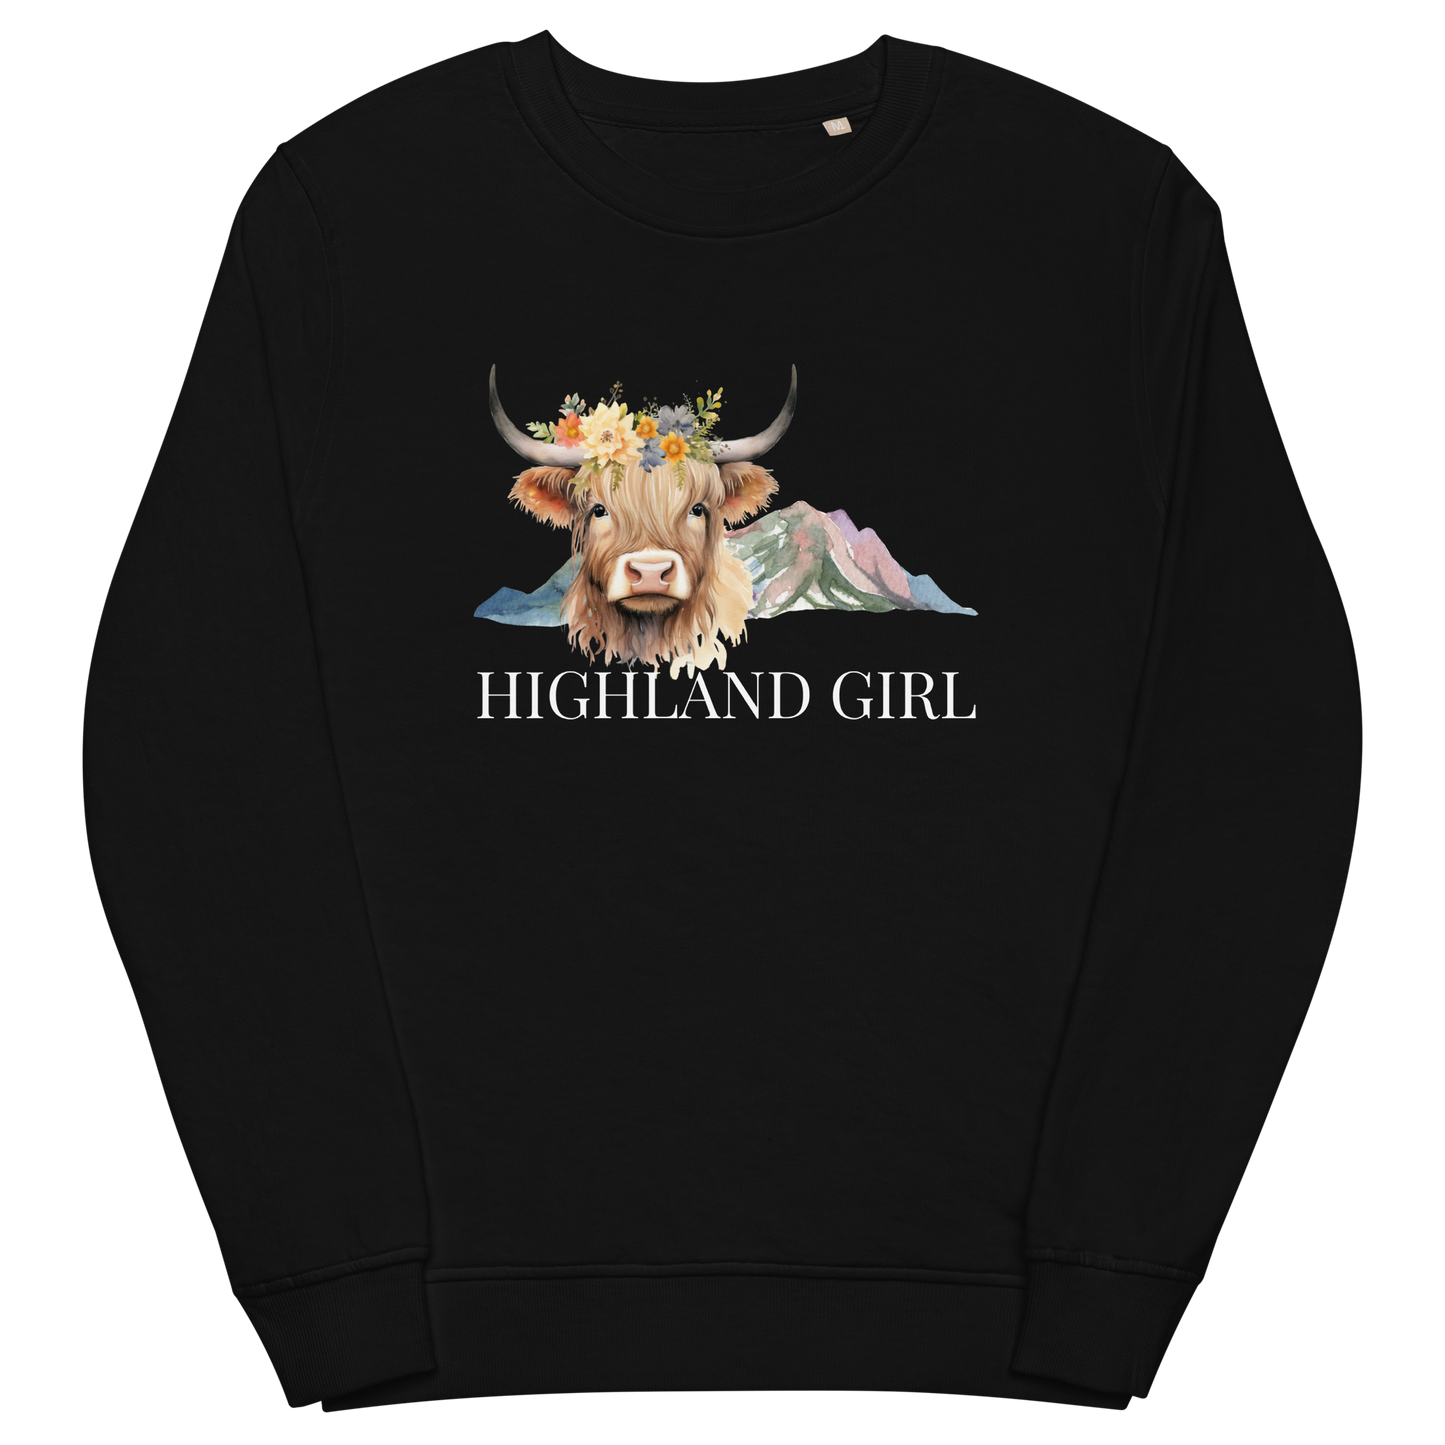 Black Organic Cotton Highland Cow Sweatshirt showcasing an adorable Highland Girl graphic on the chest - Cute Graphic Highland Cow Sweatshirts - Boozy Fox